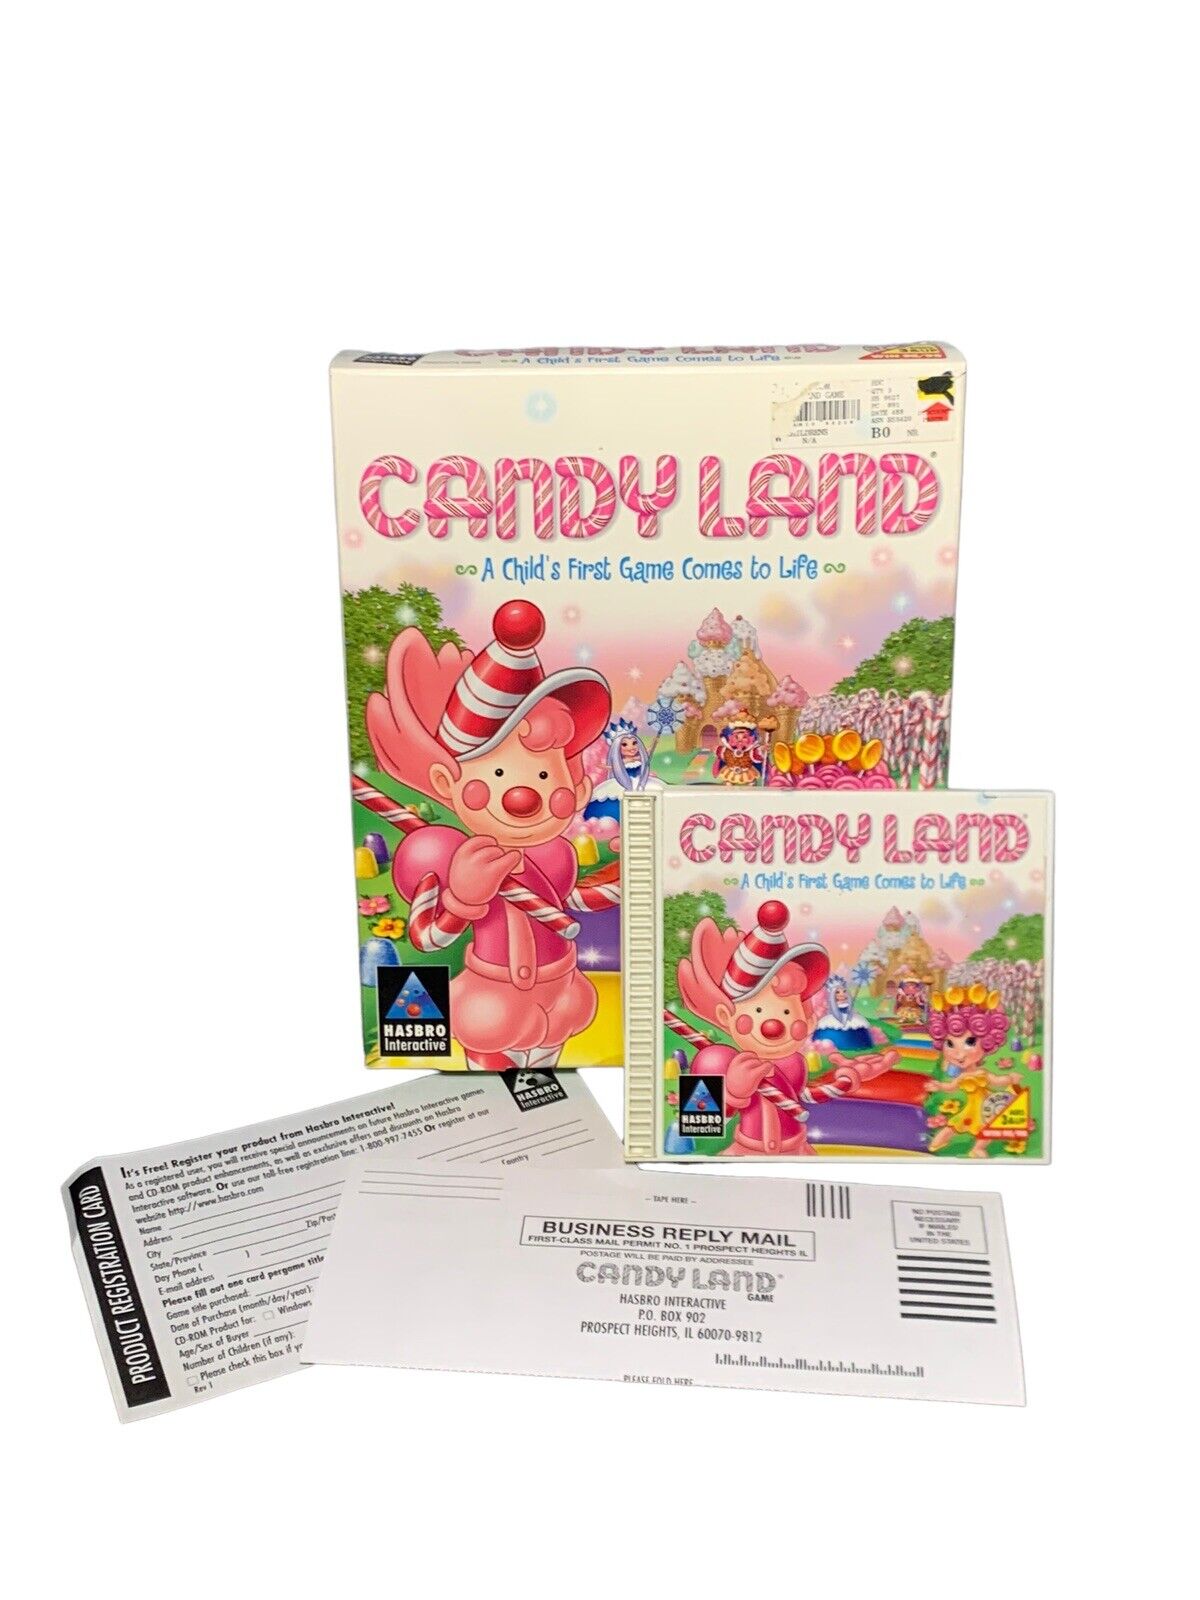 Candy Land Adventure PC Big Box Game (PC, 1998) Complete In Box CIB Untested